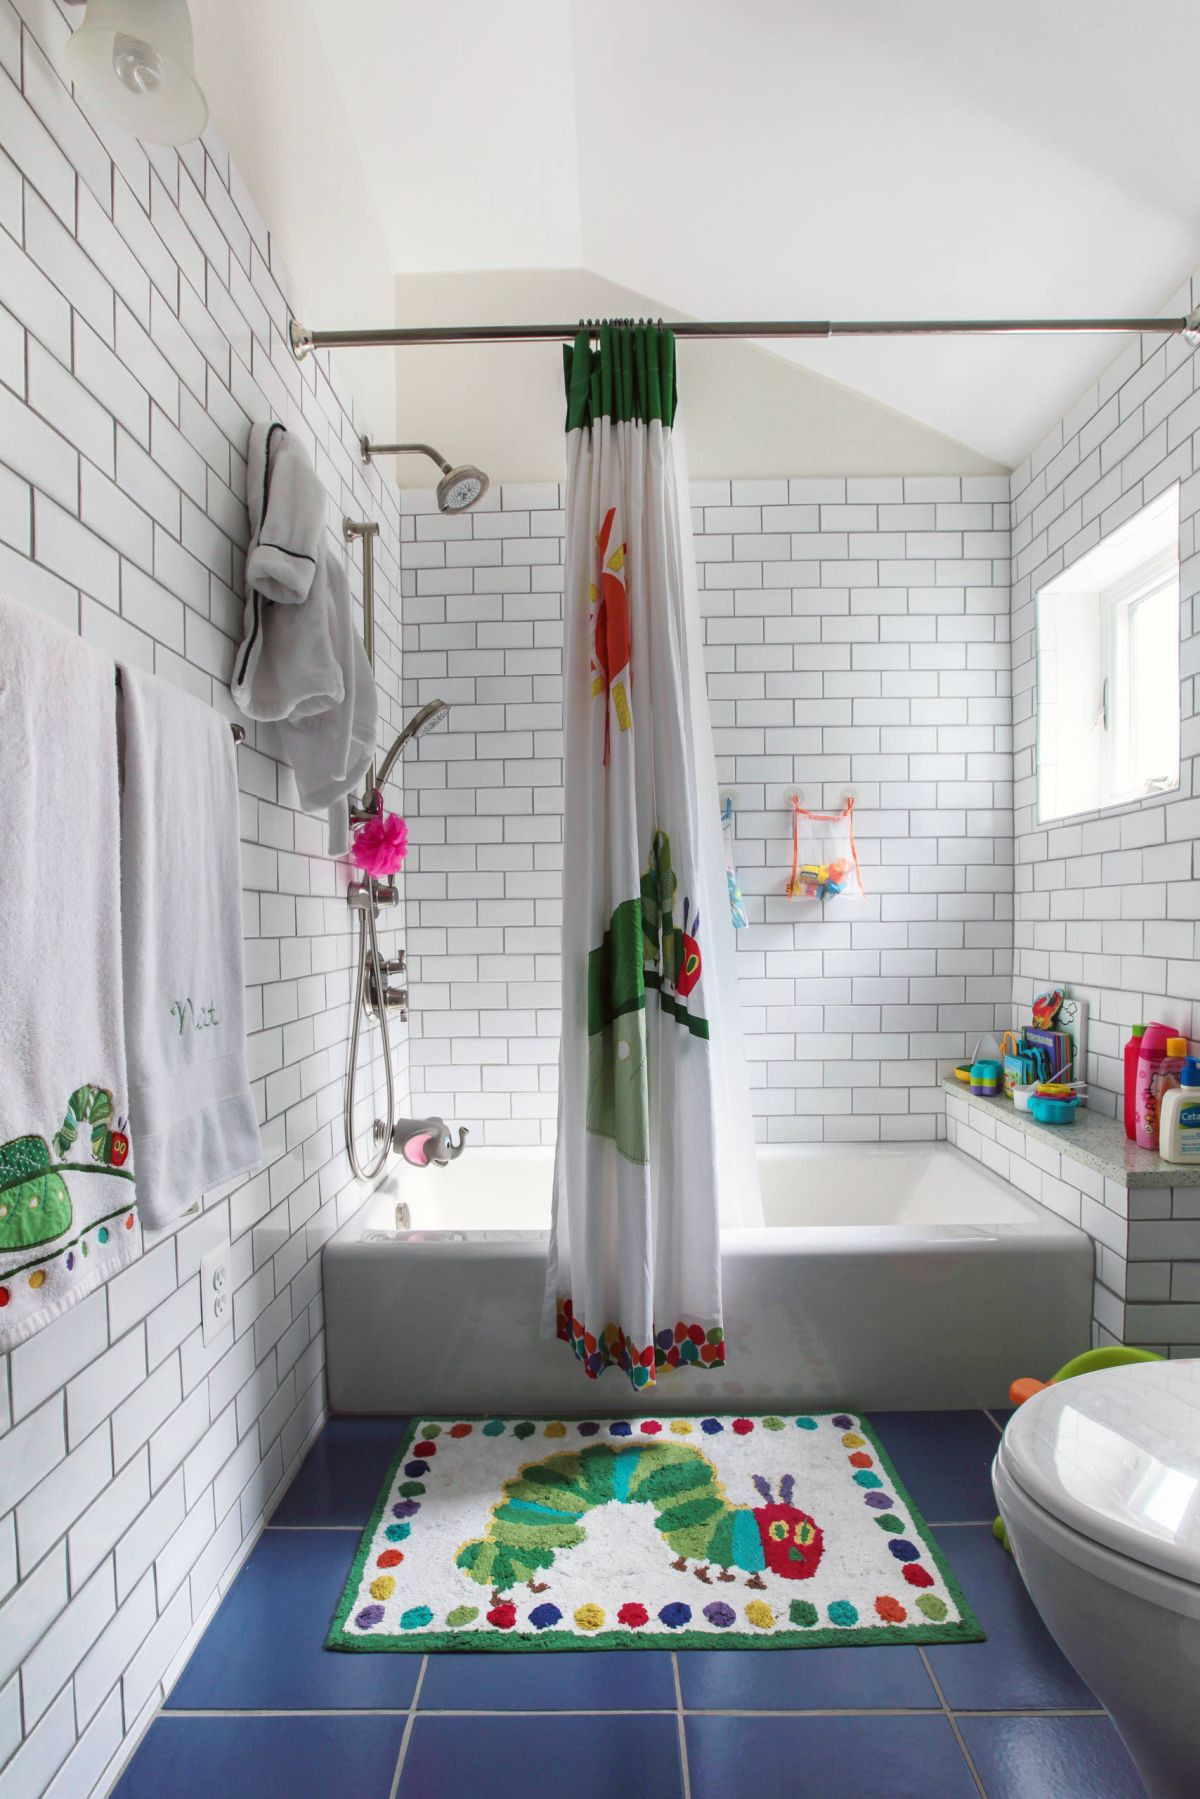 Kids Bath Room Decor
 12 Tips for The Best Kids Bathroom Decor